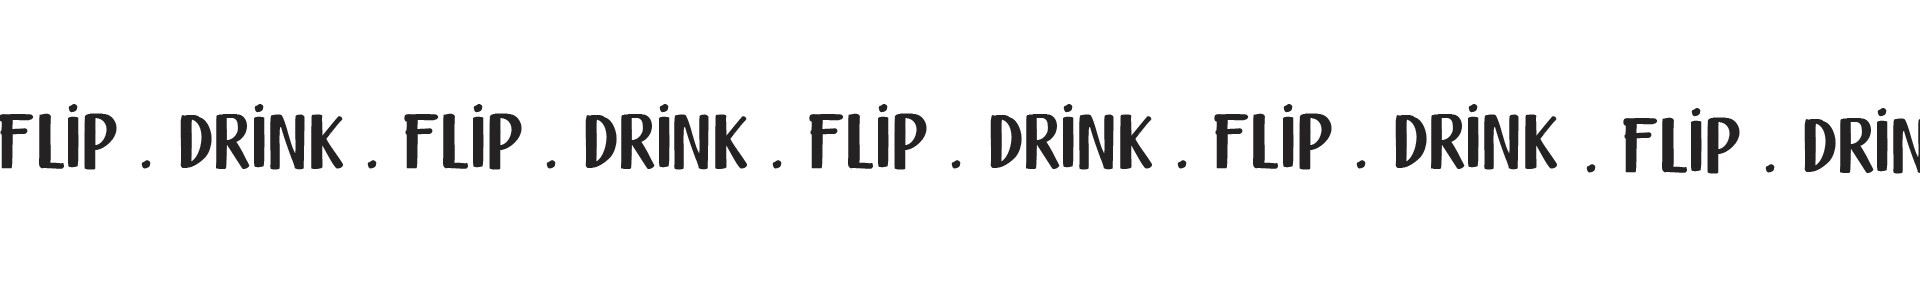 Drink Flip